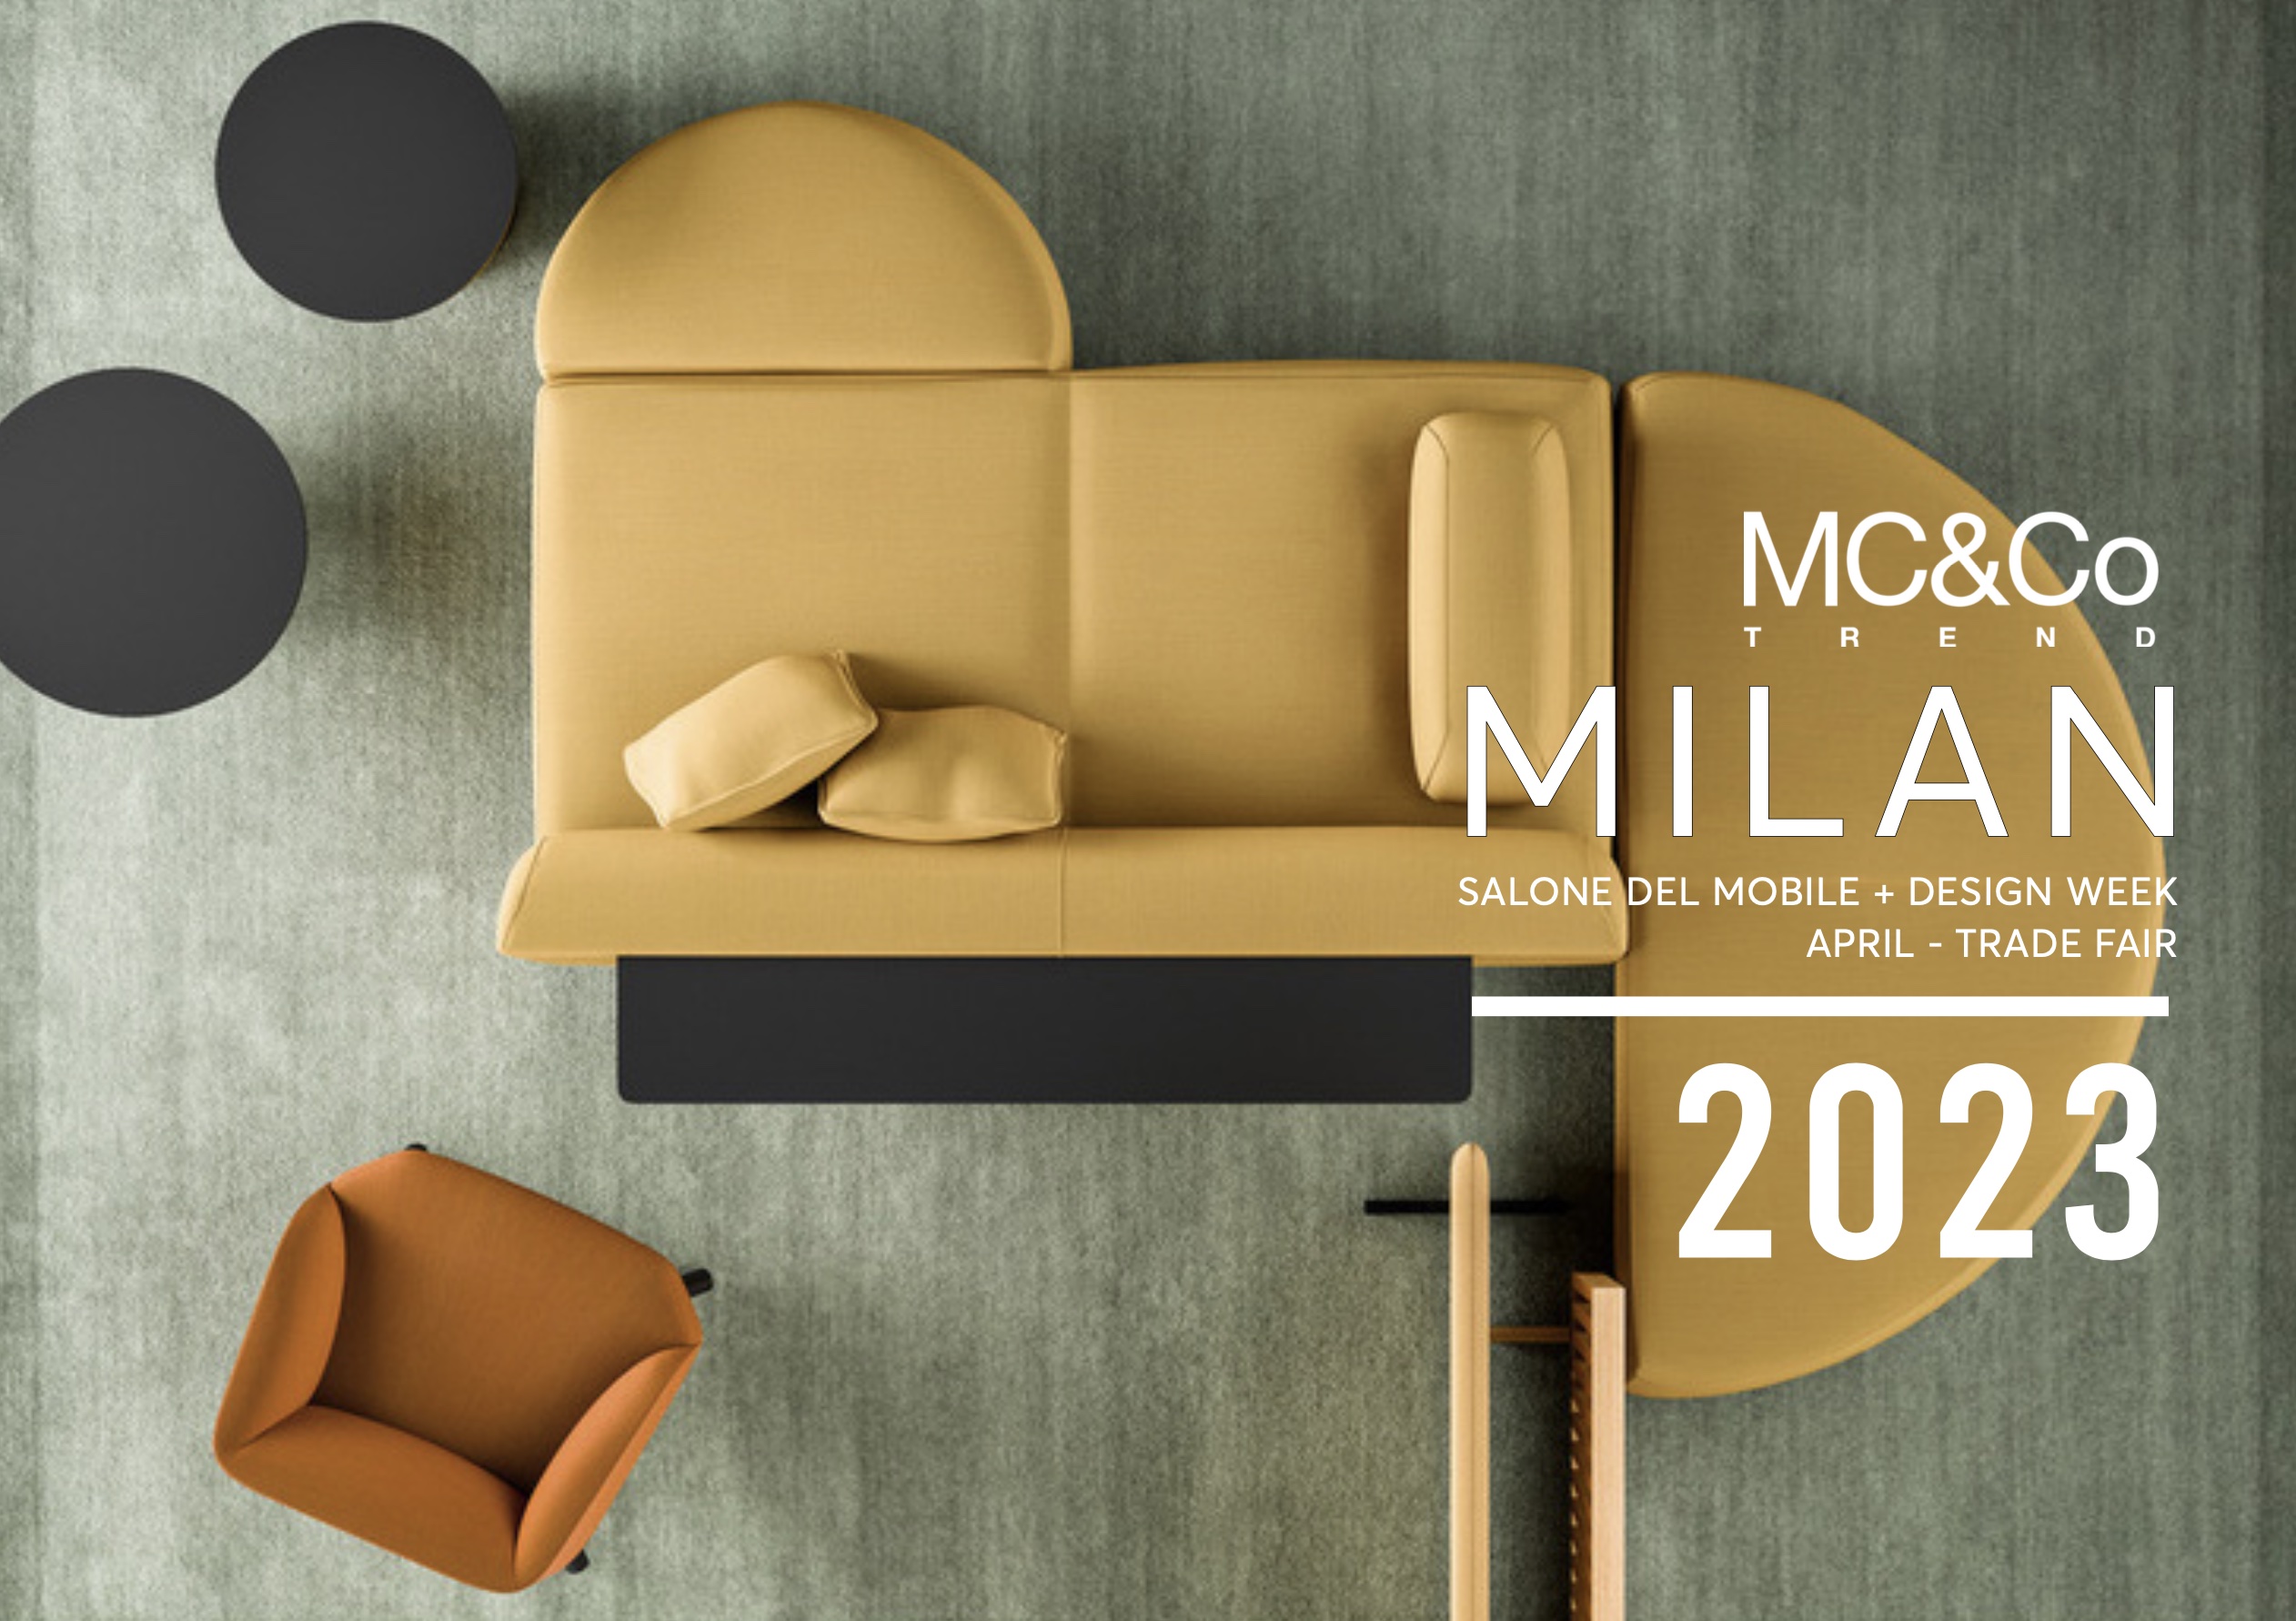 Milan Design Week 2023  Brands You'll Love at Salone del Mobile